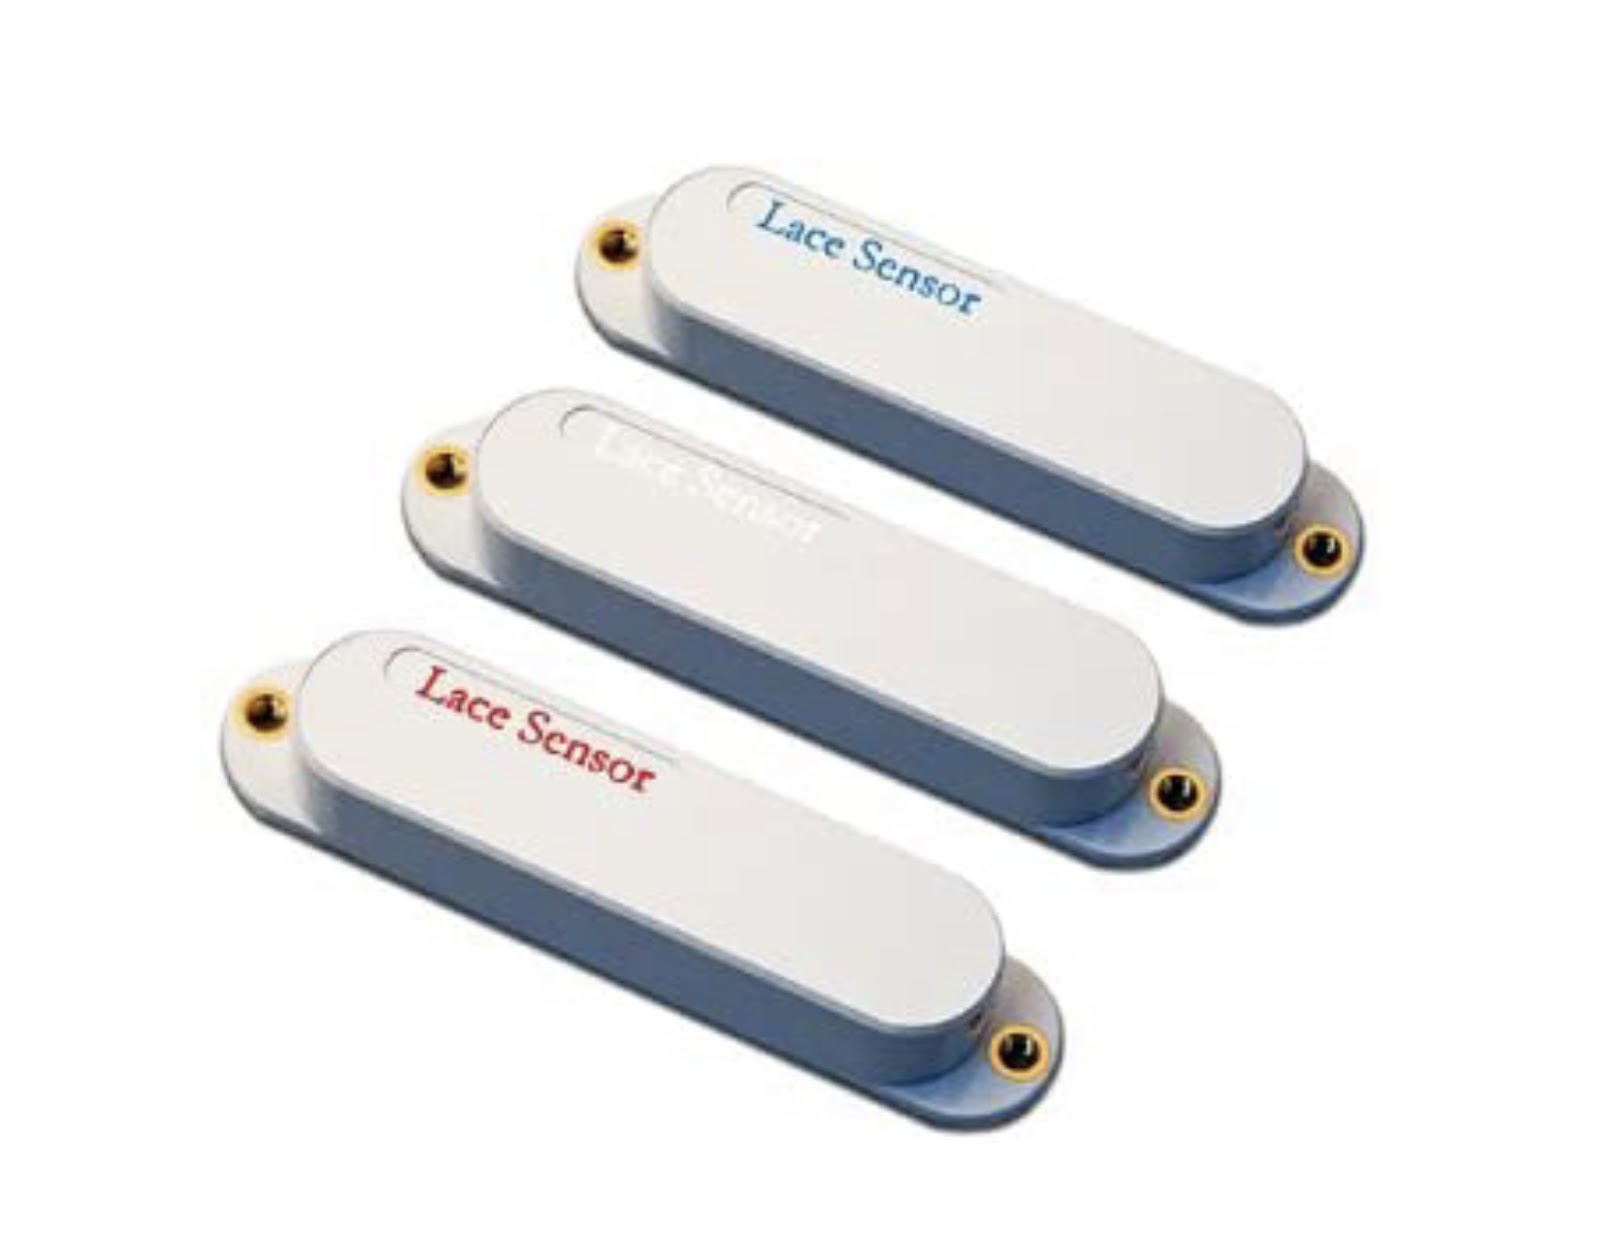 Lace Sensor Ultimate Triple Pack.